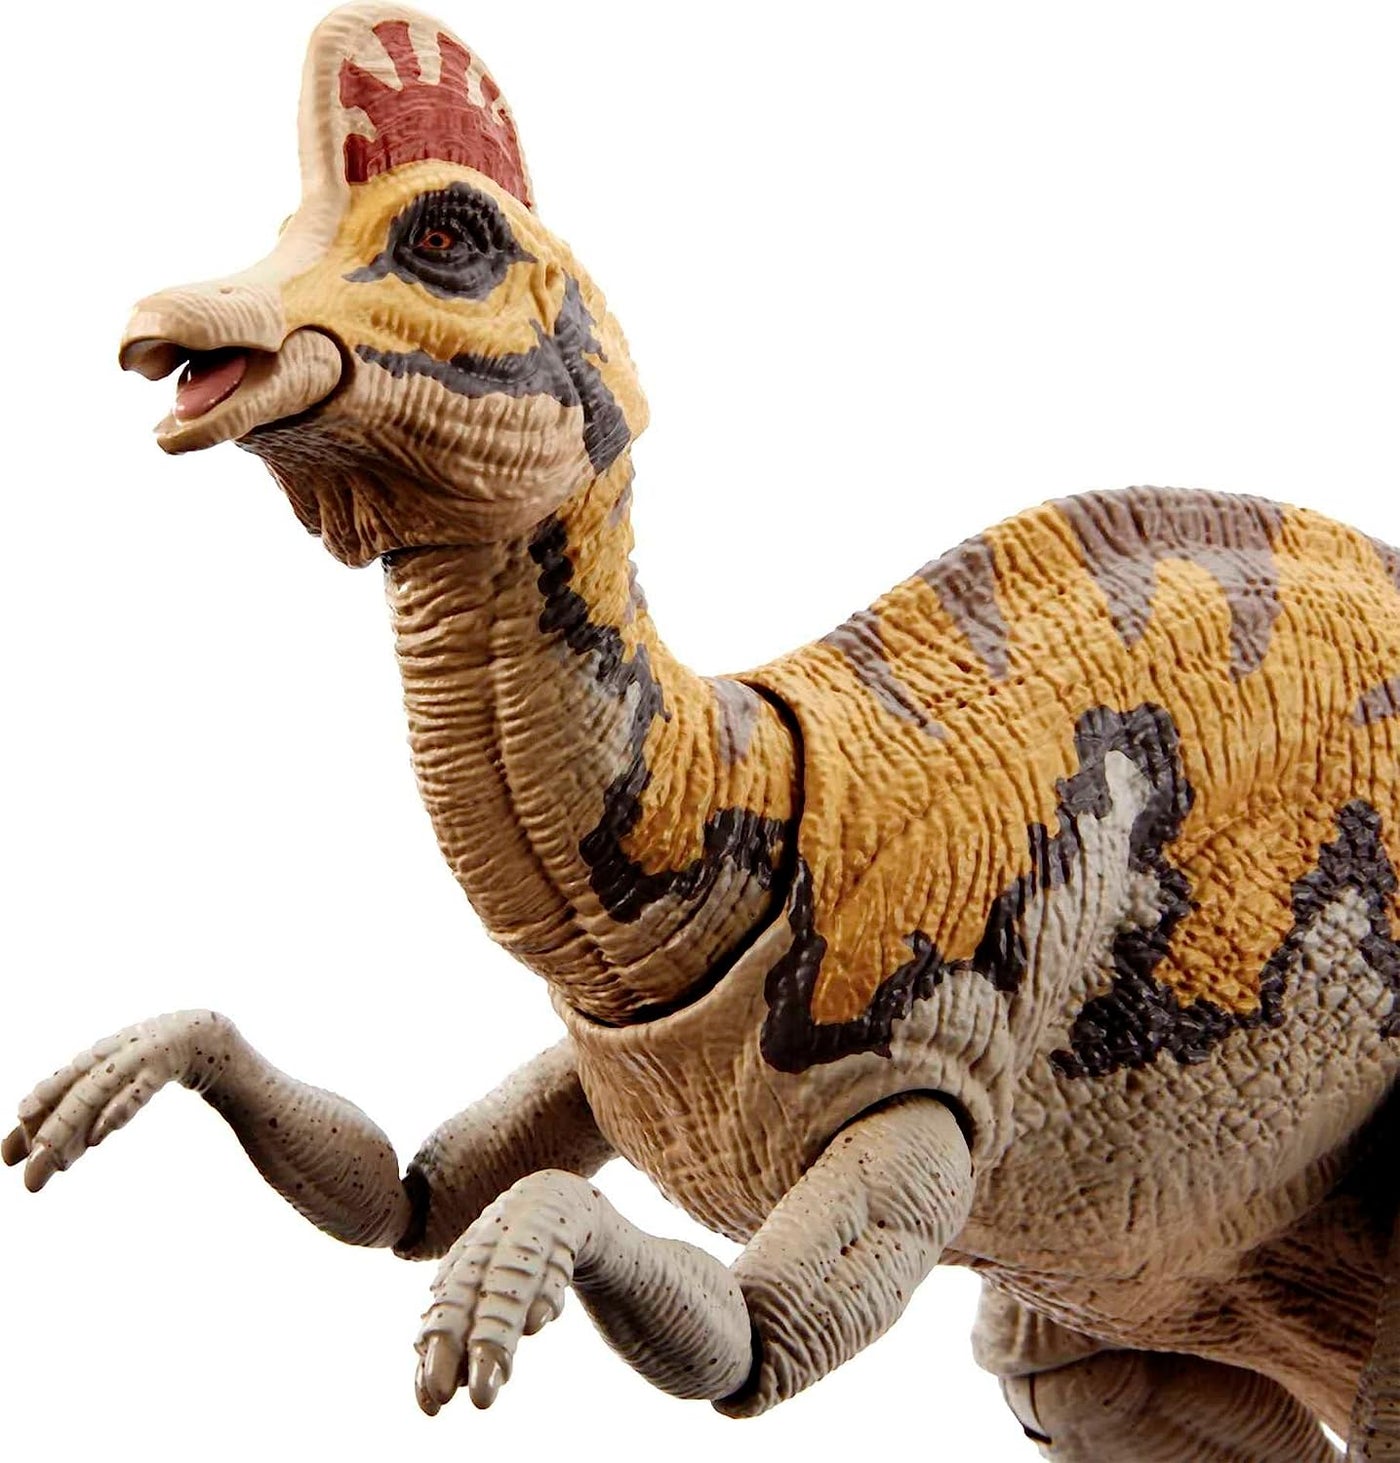 Mattel Jurassic World Mattel Jurassic Park III Hammond Collection Dinosaur  Action Figure, Velociraptor with Articulation, 3.75-in Tall